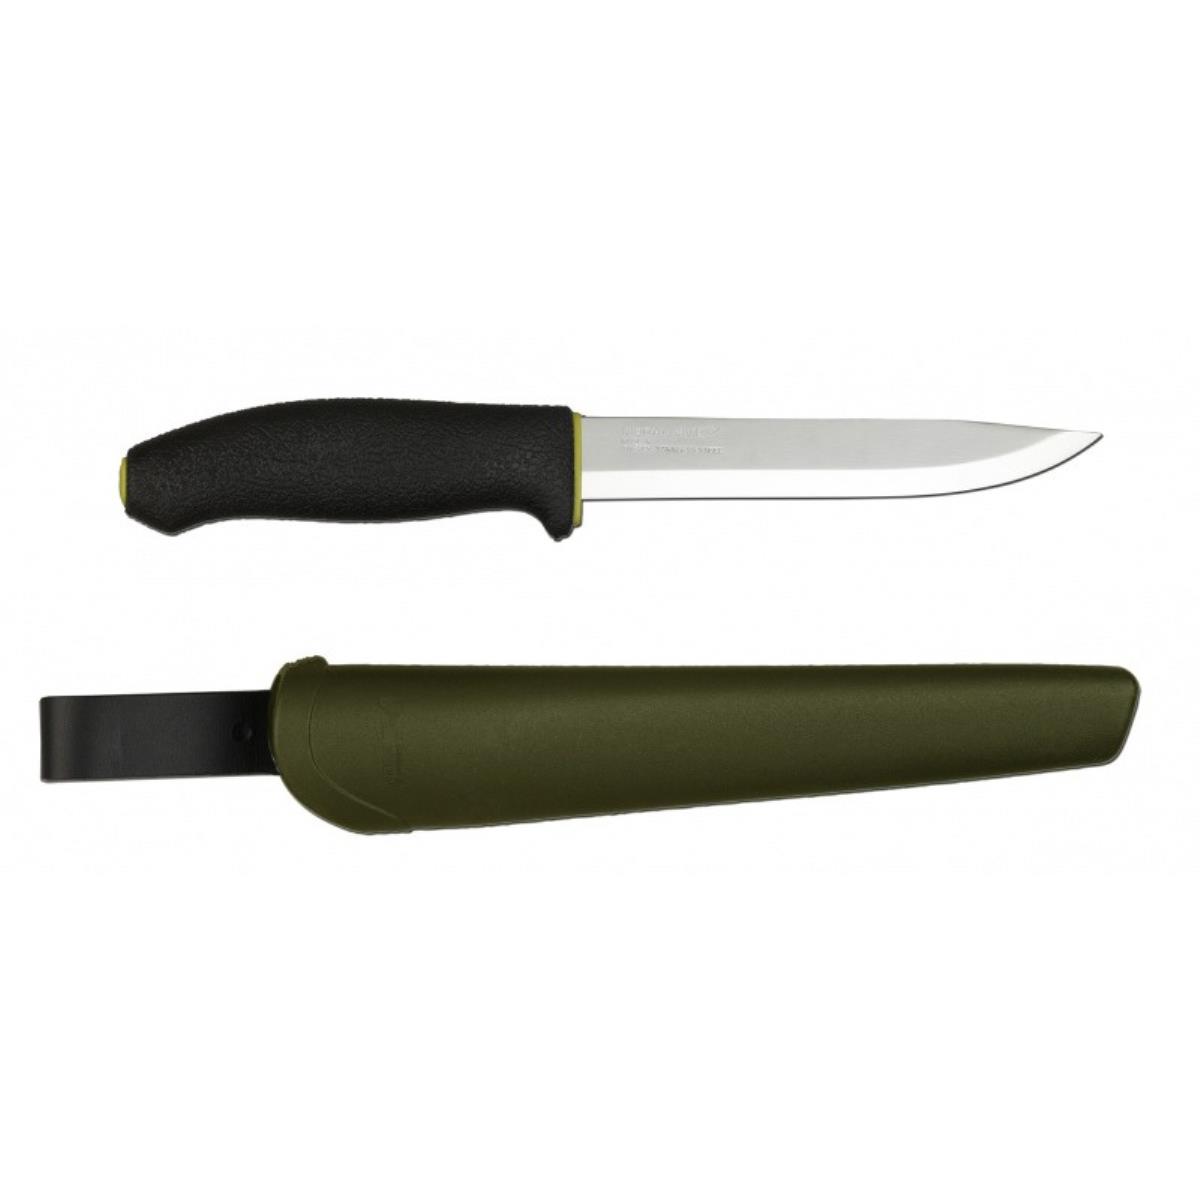 Нож Allround (12475) Morakniv нож для шашлыка 30 см длина лезвия 15 см армения